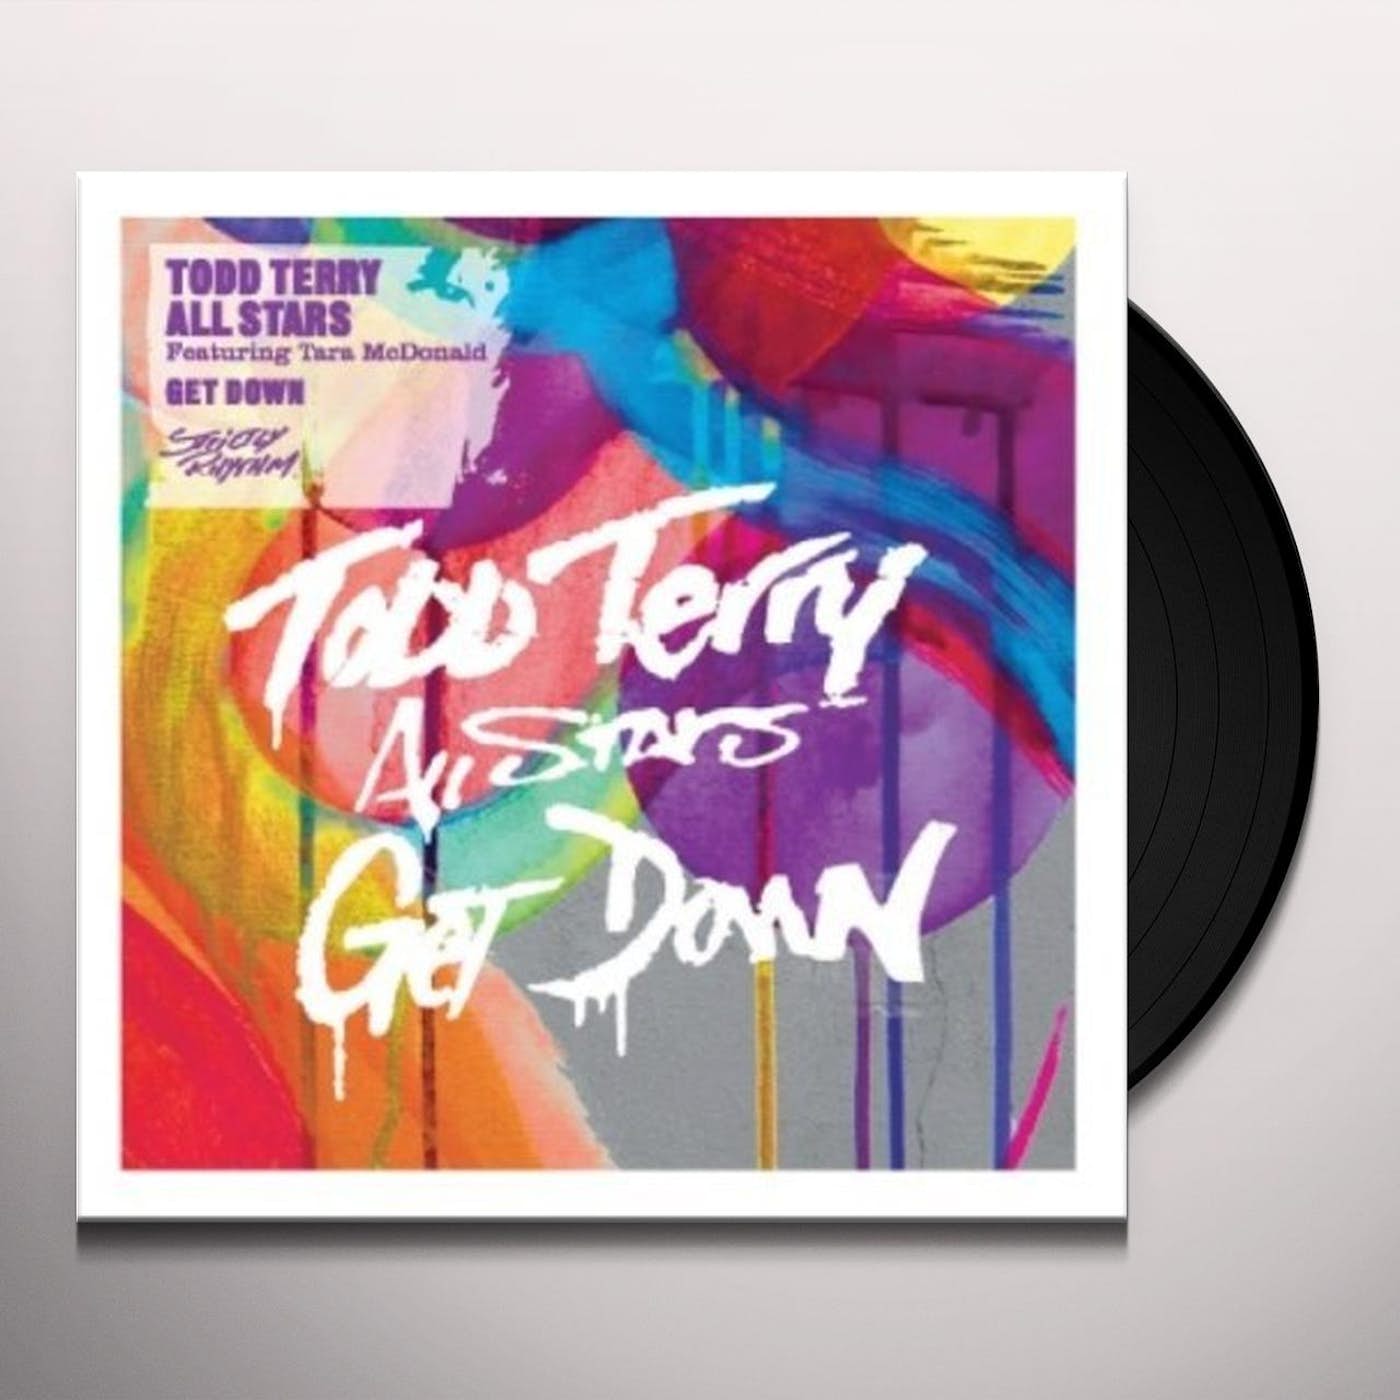 Todd Allstars Terry GET DOWN Vinyl Record